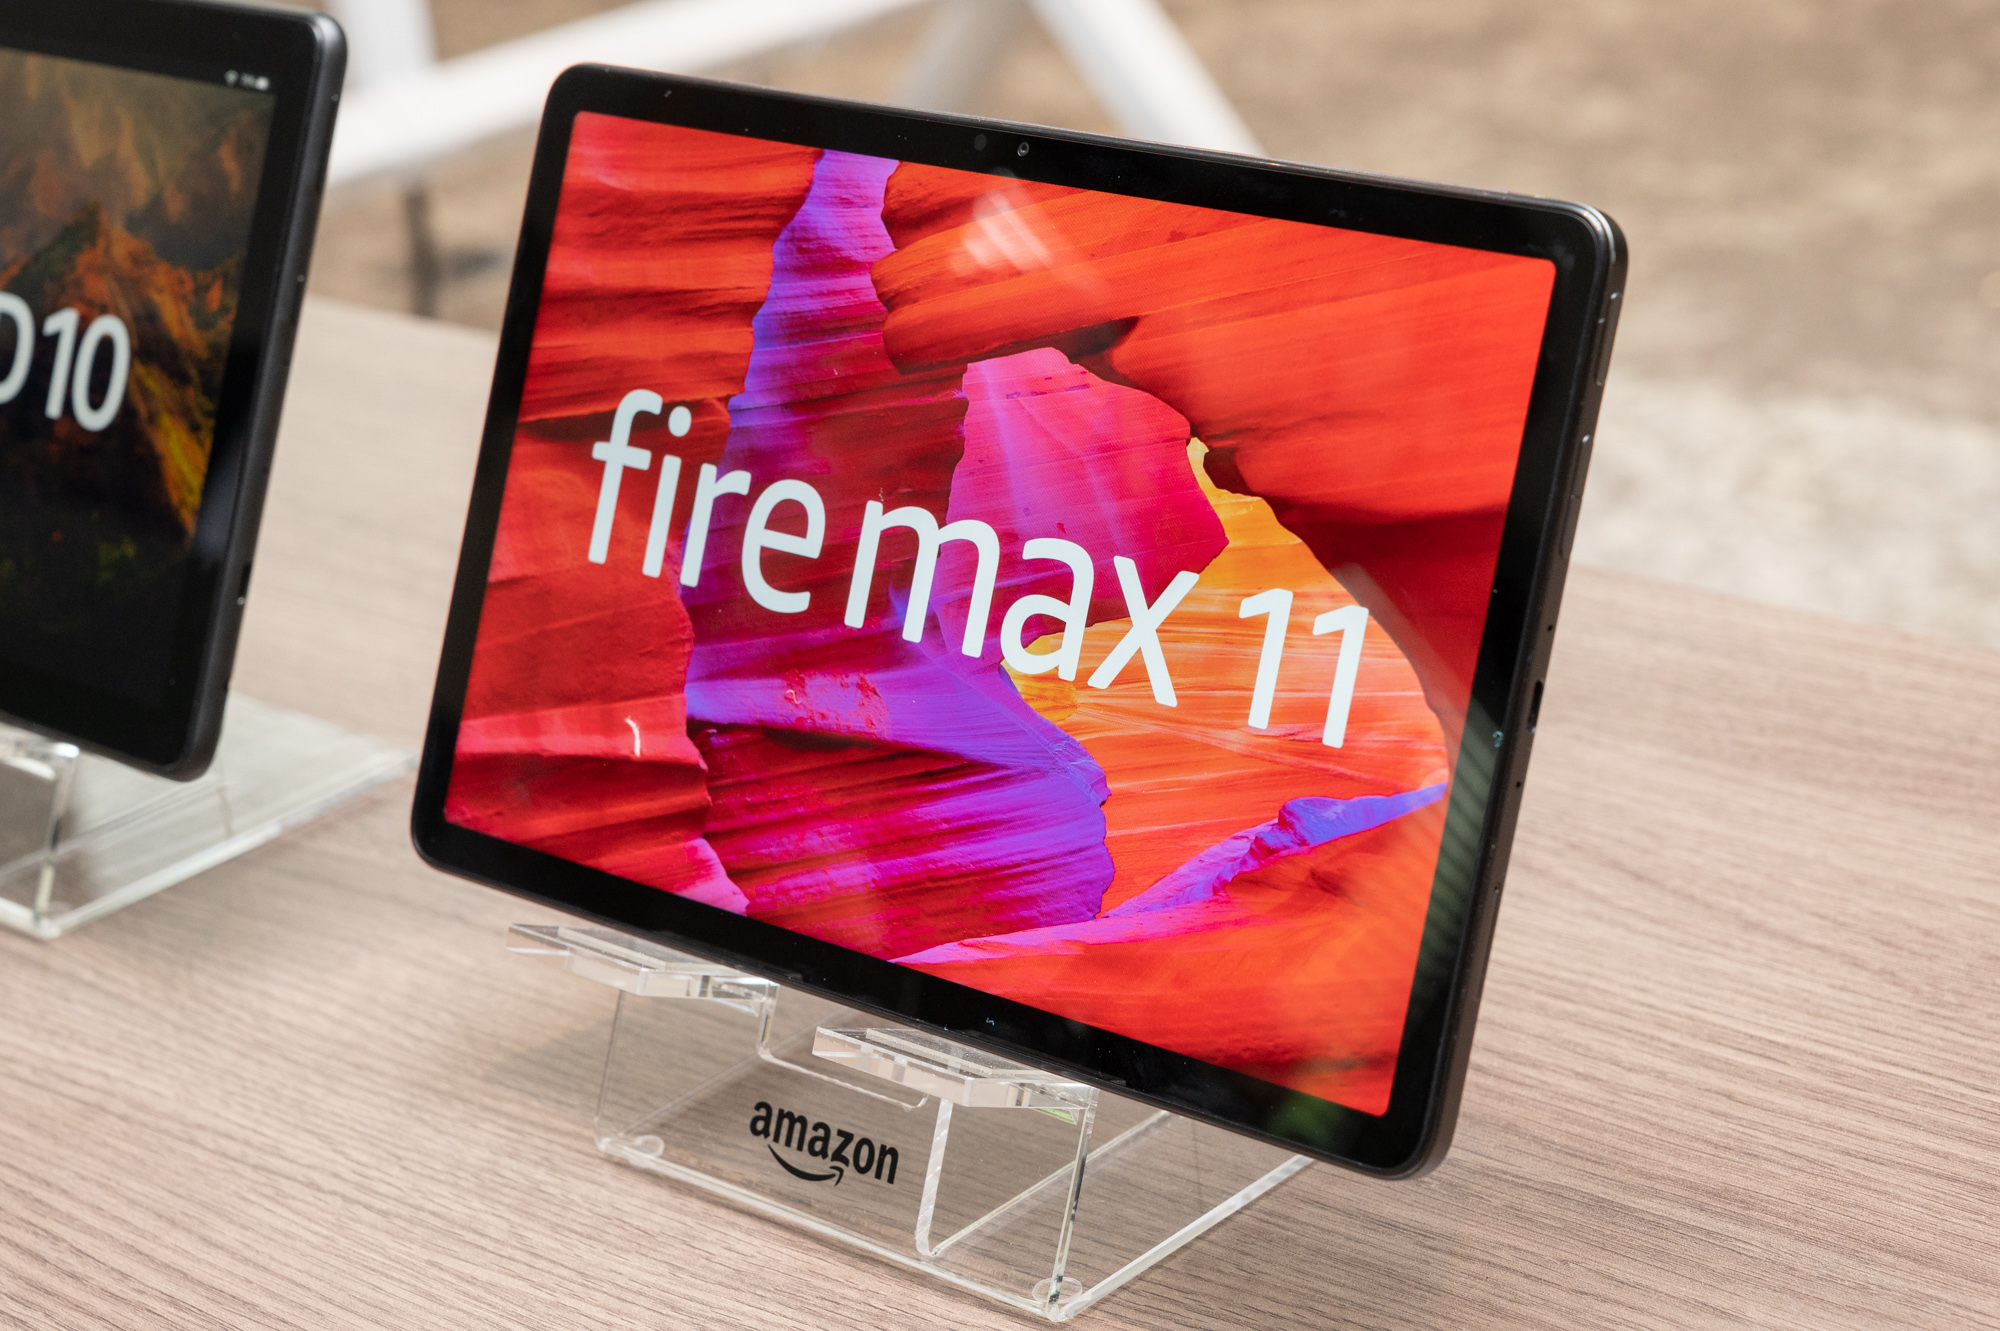 Fire Max 11」登場 ペン対応でパワフルな11型タブレット - Impress Watch